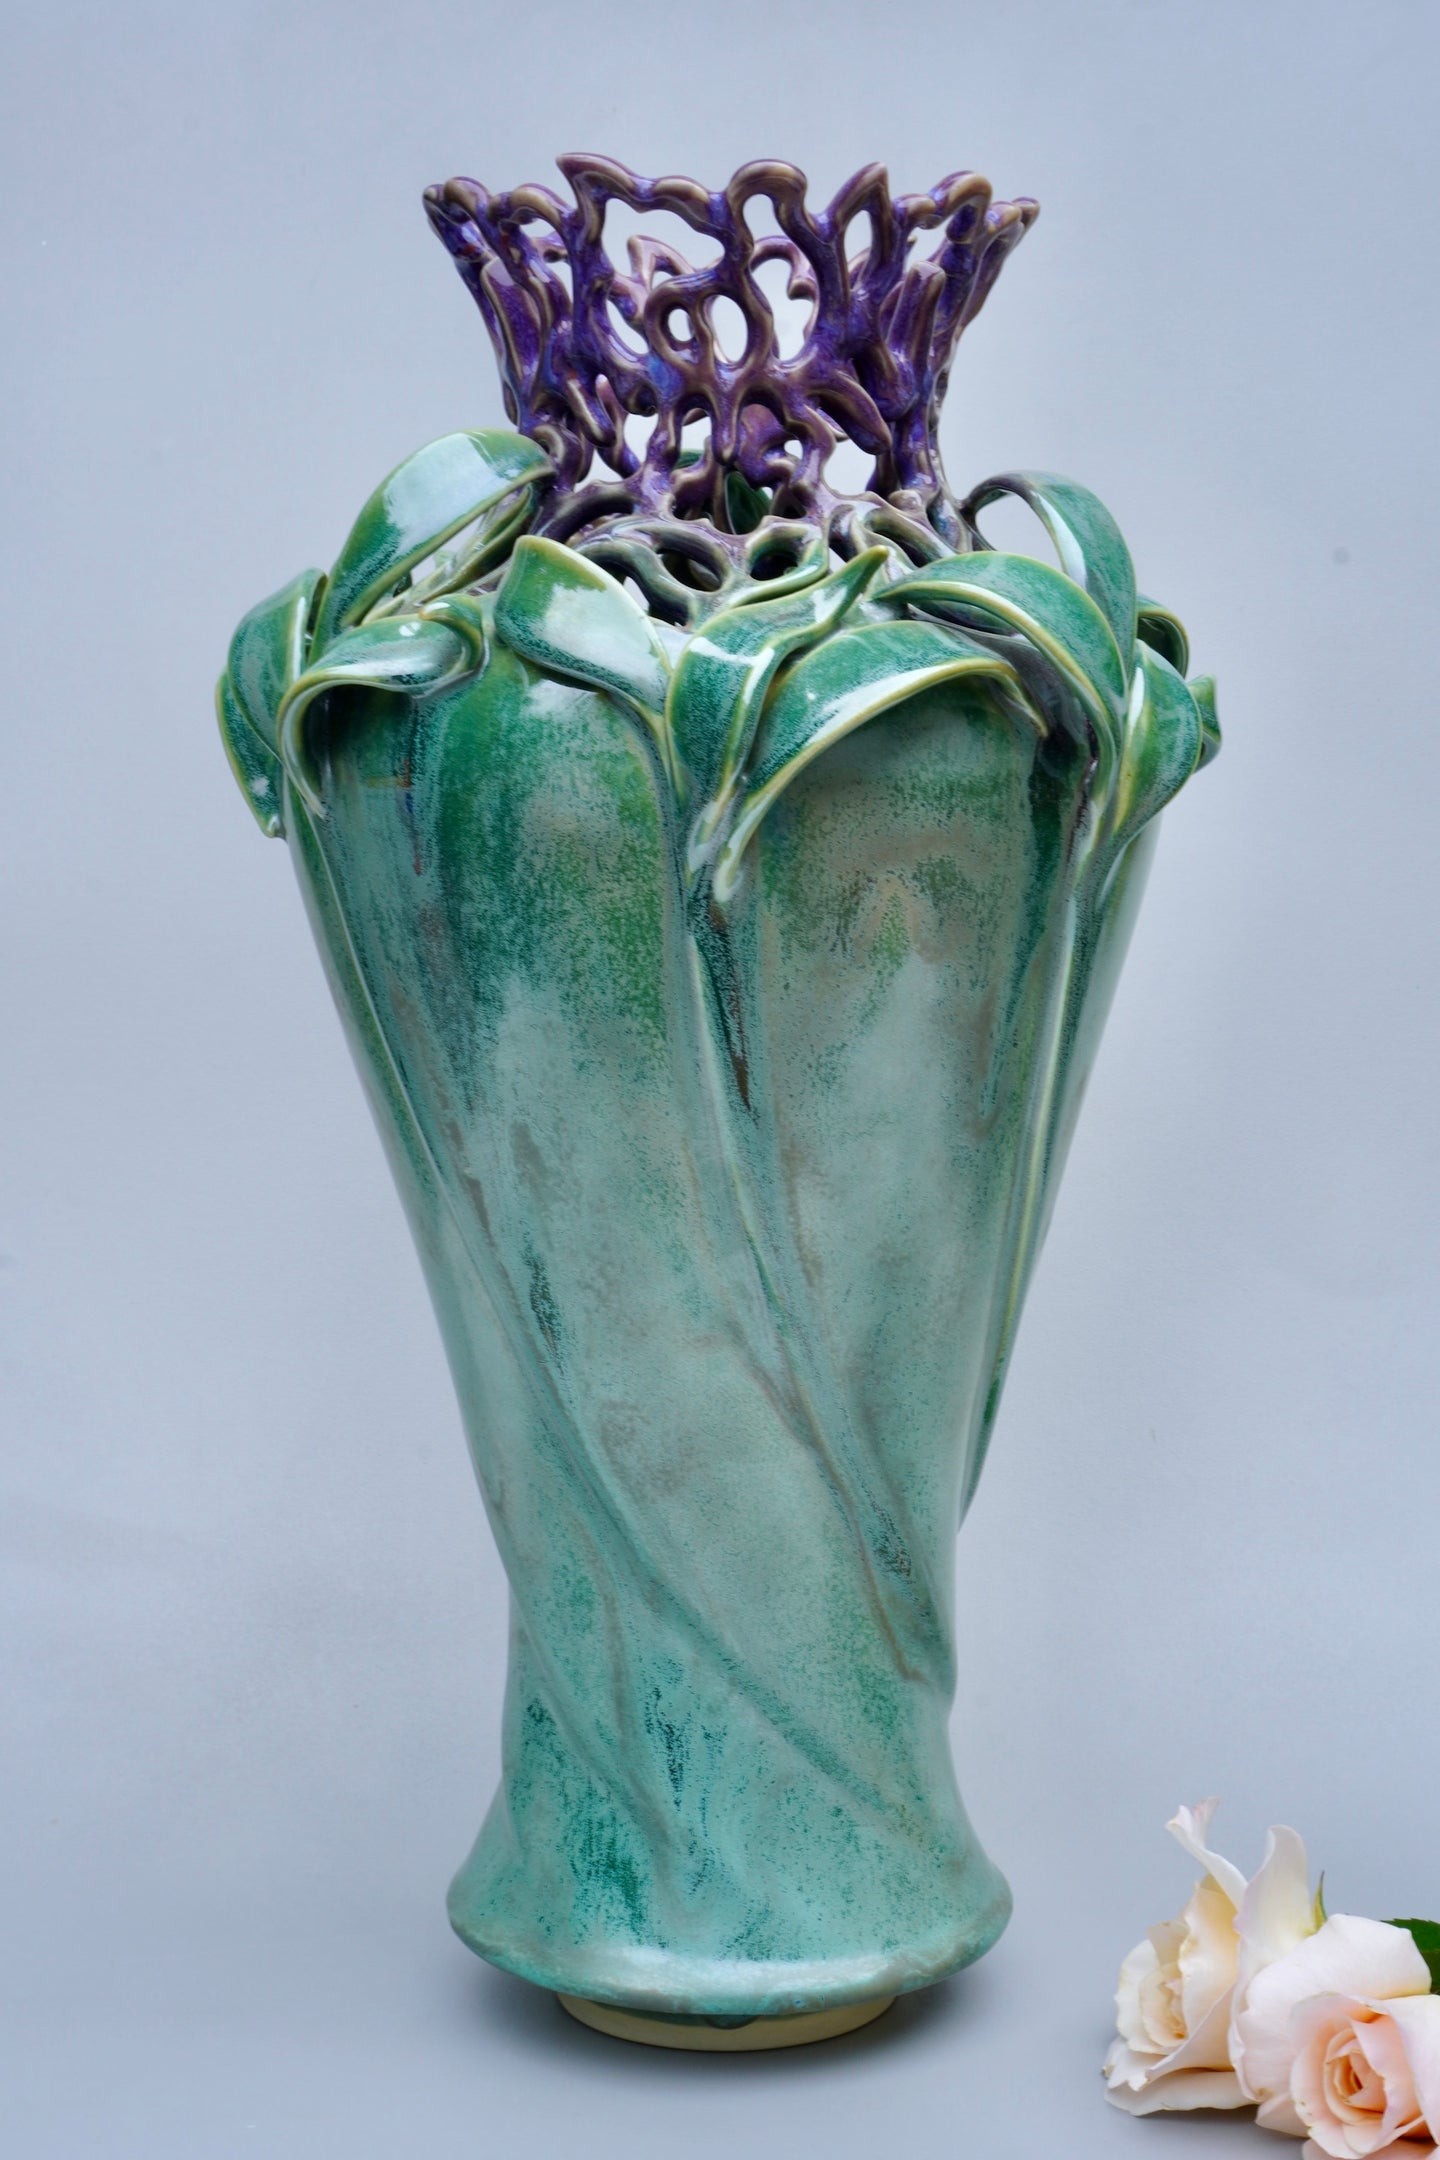 011 Iris Centerpiece Vase with Multiple Glazes